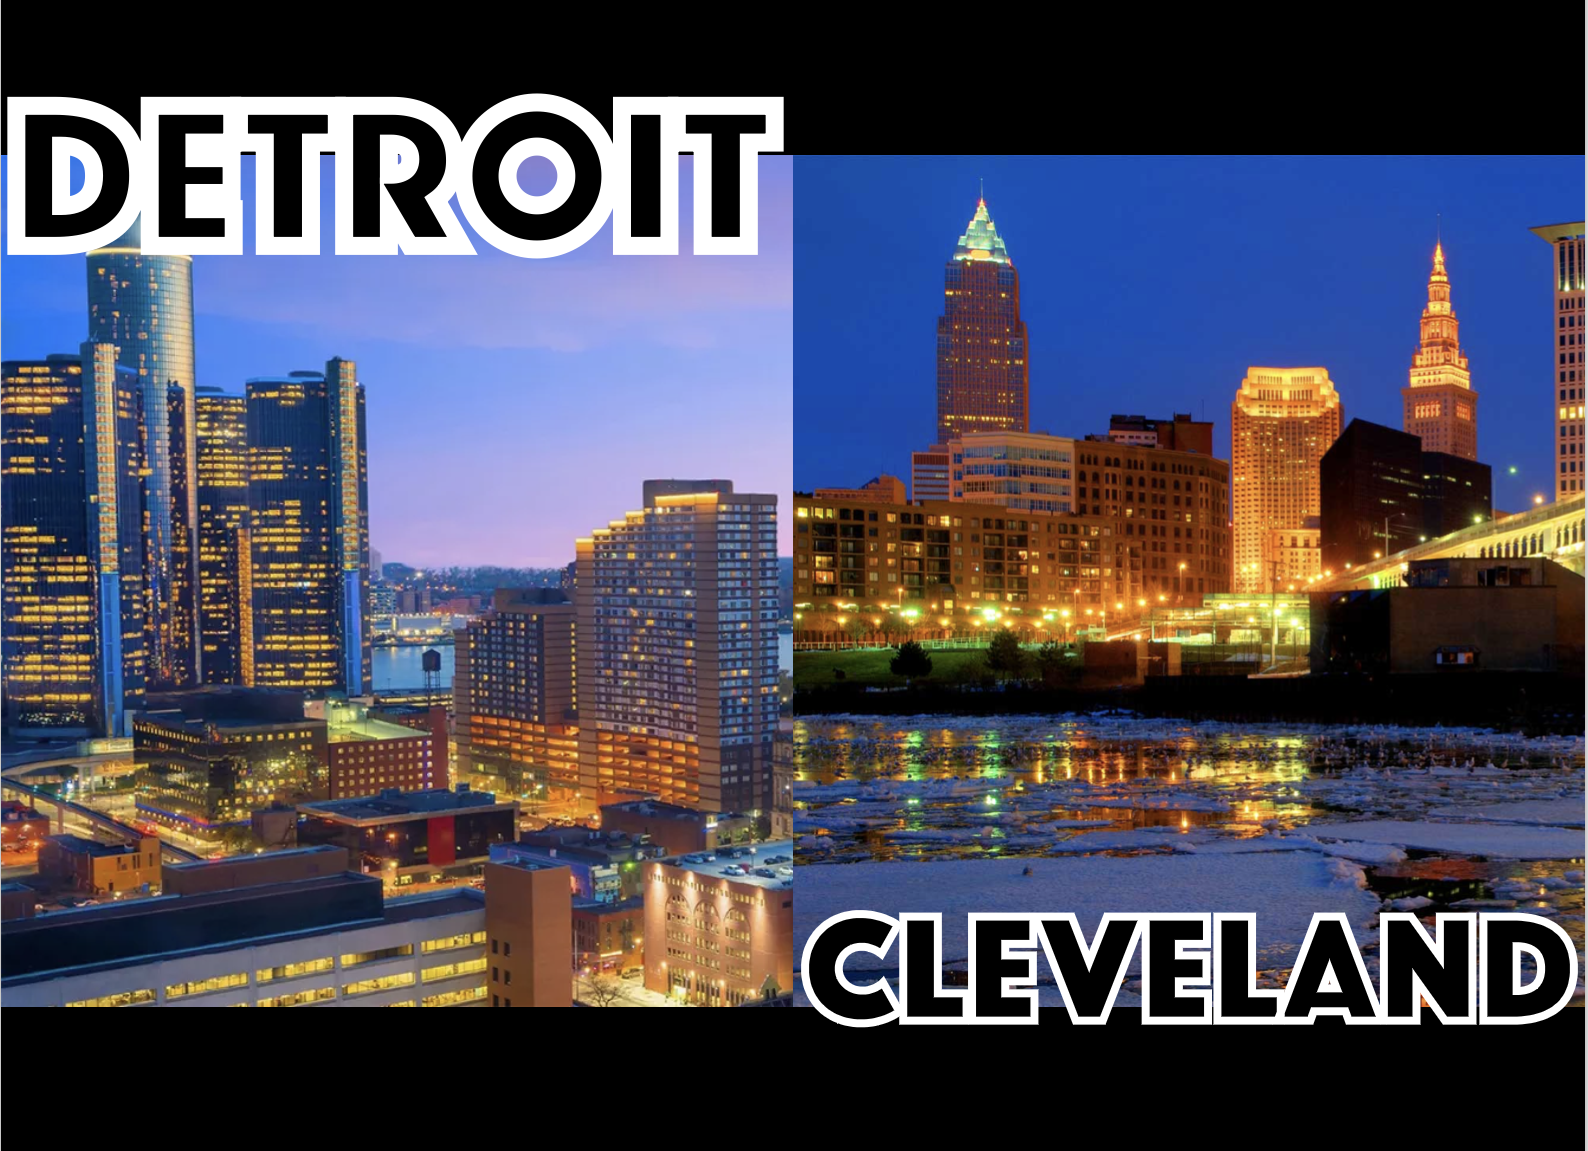 Great Lakes - Detroit Cleveland